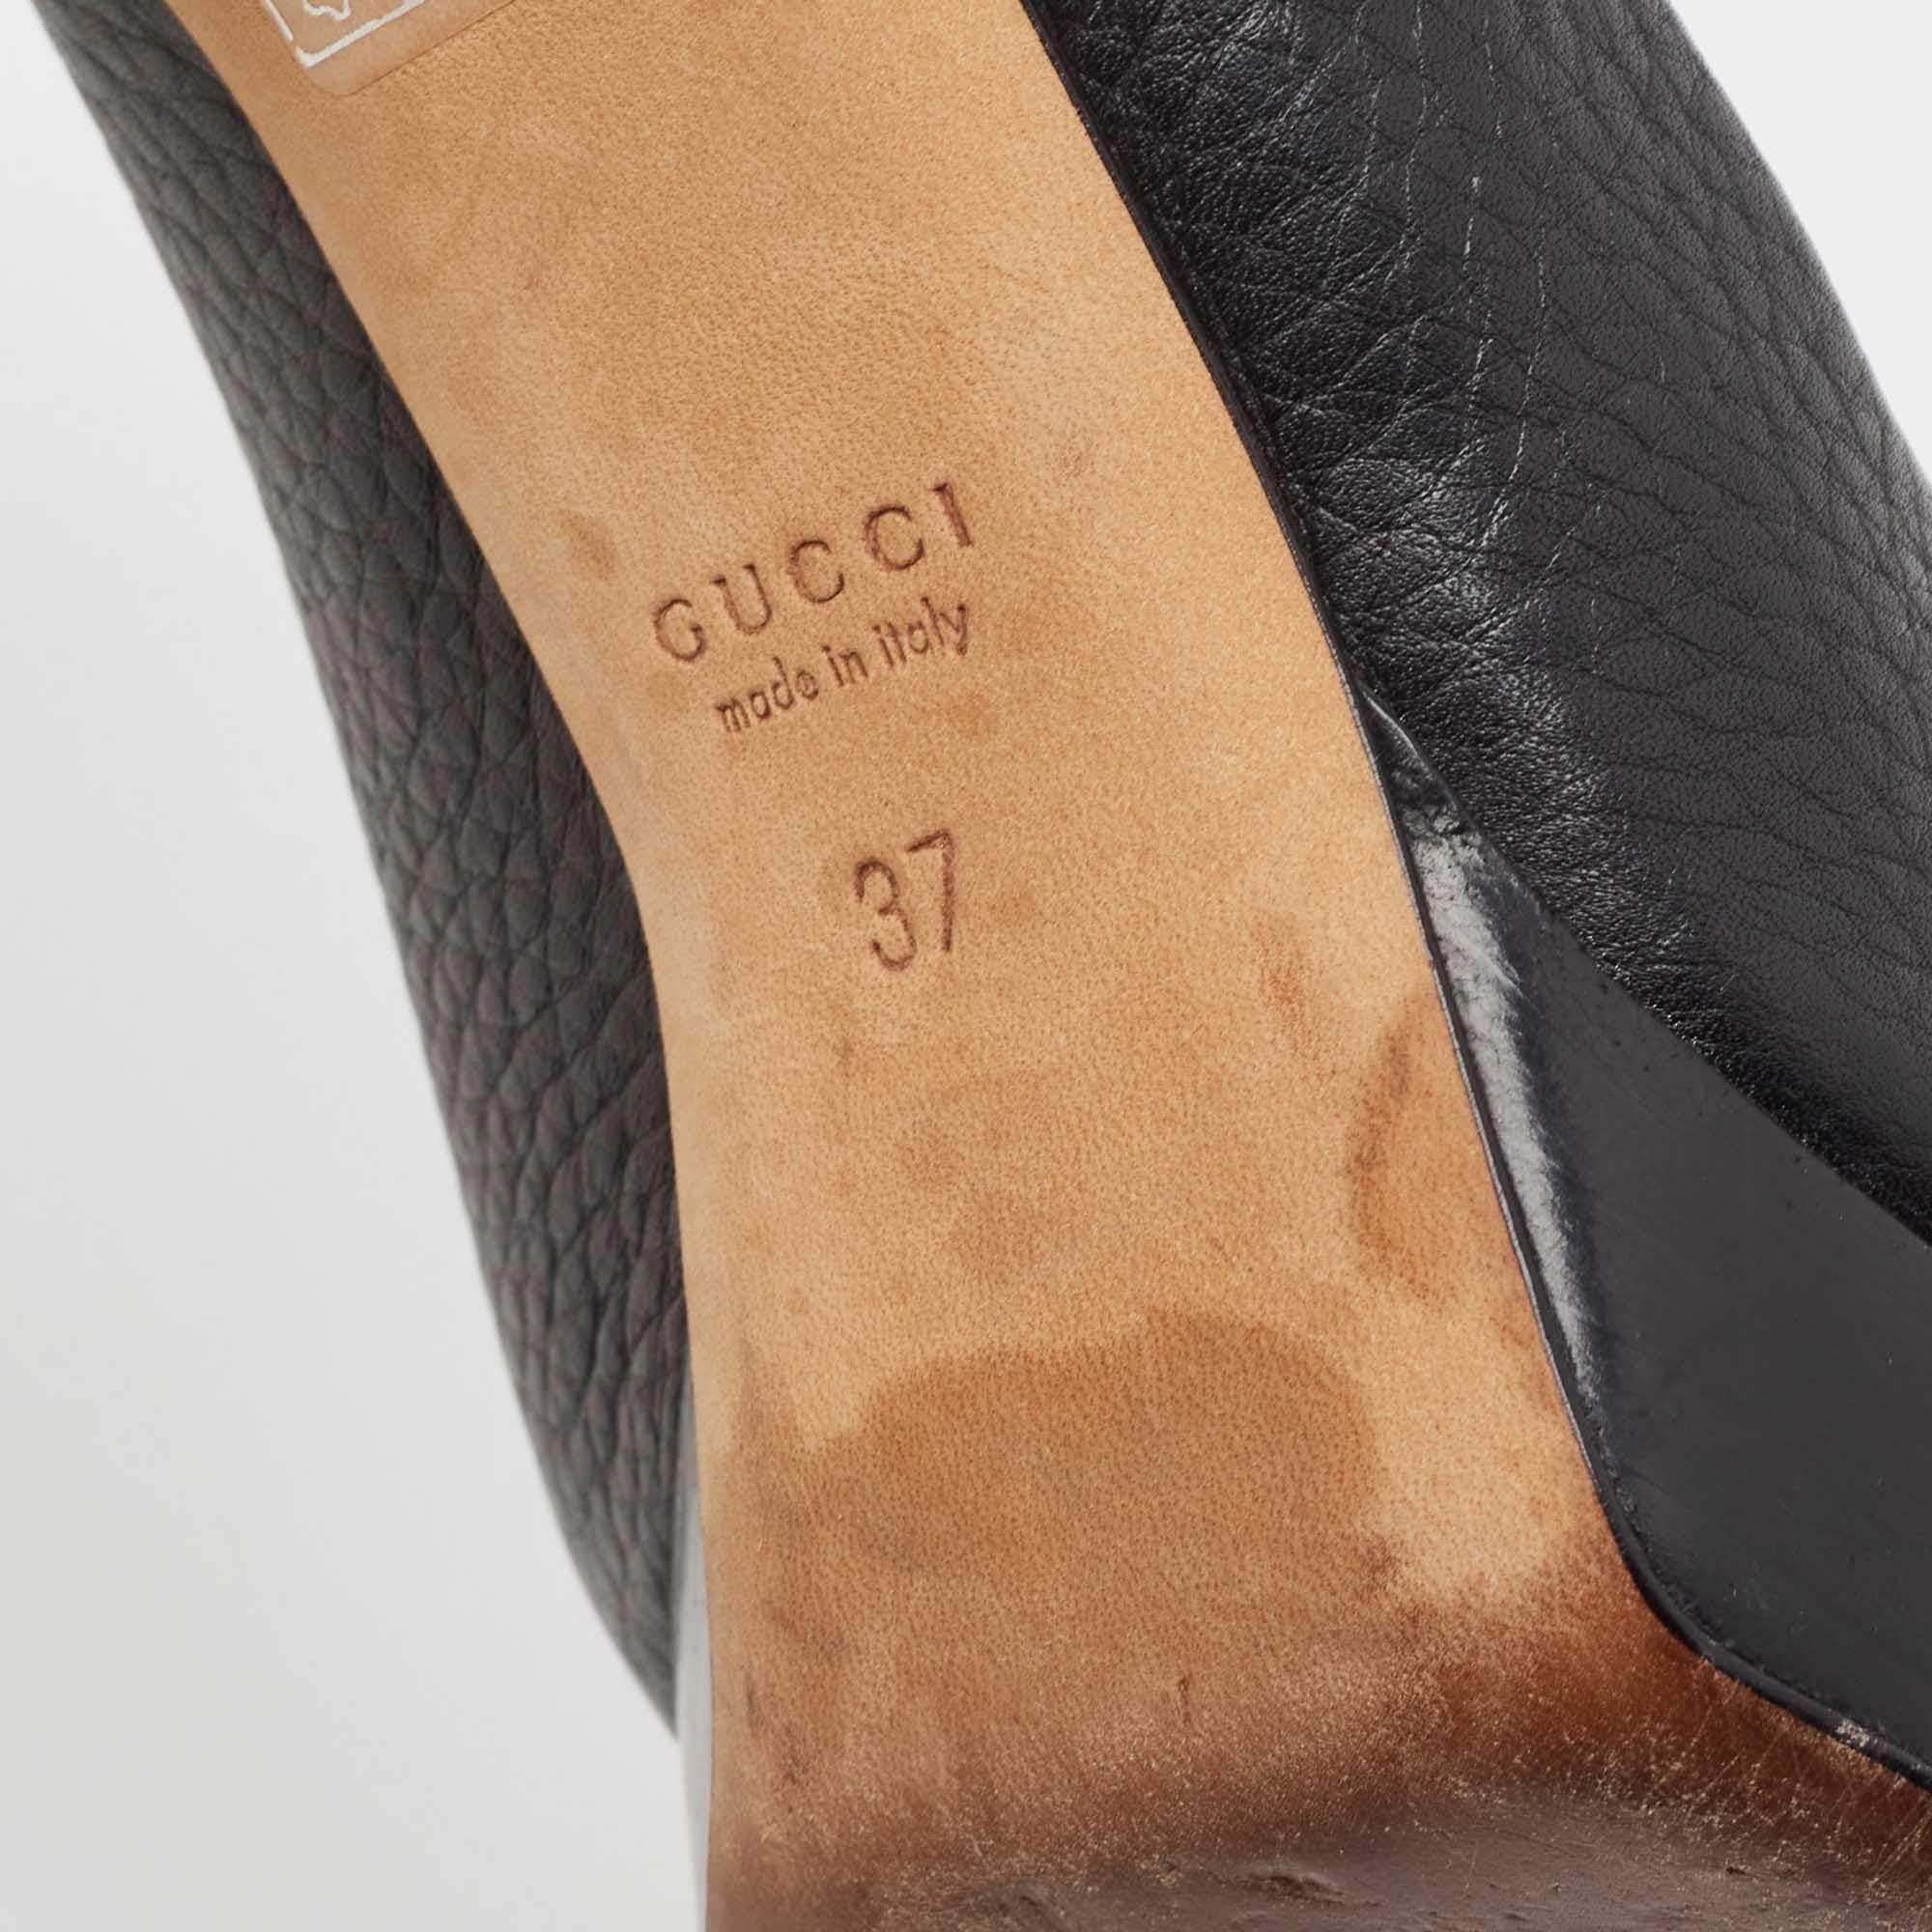 Gucci Black Leather Peep Toe Pumps Size 37 3